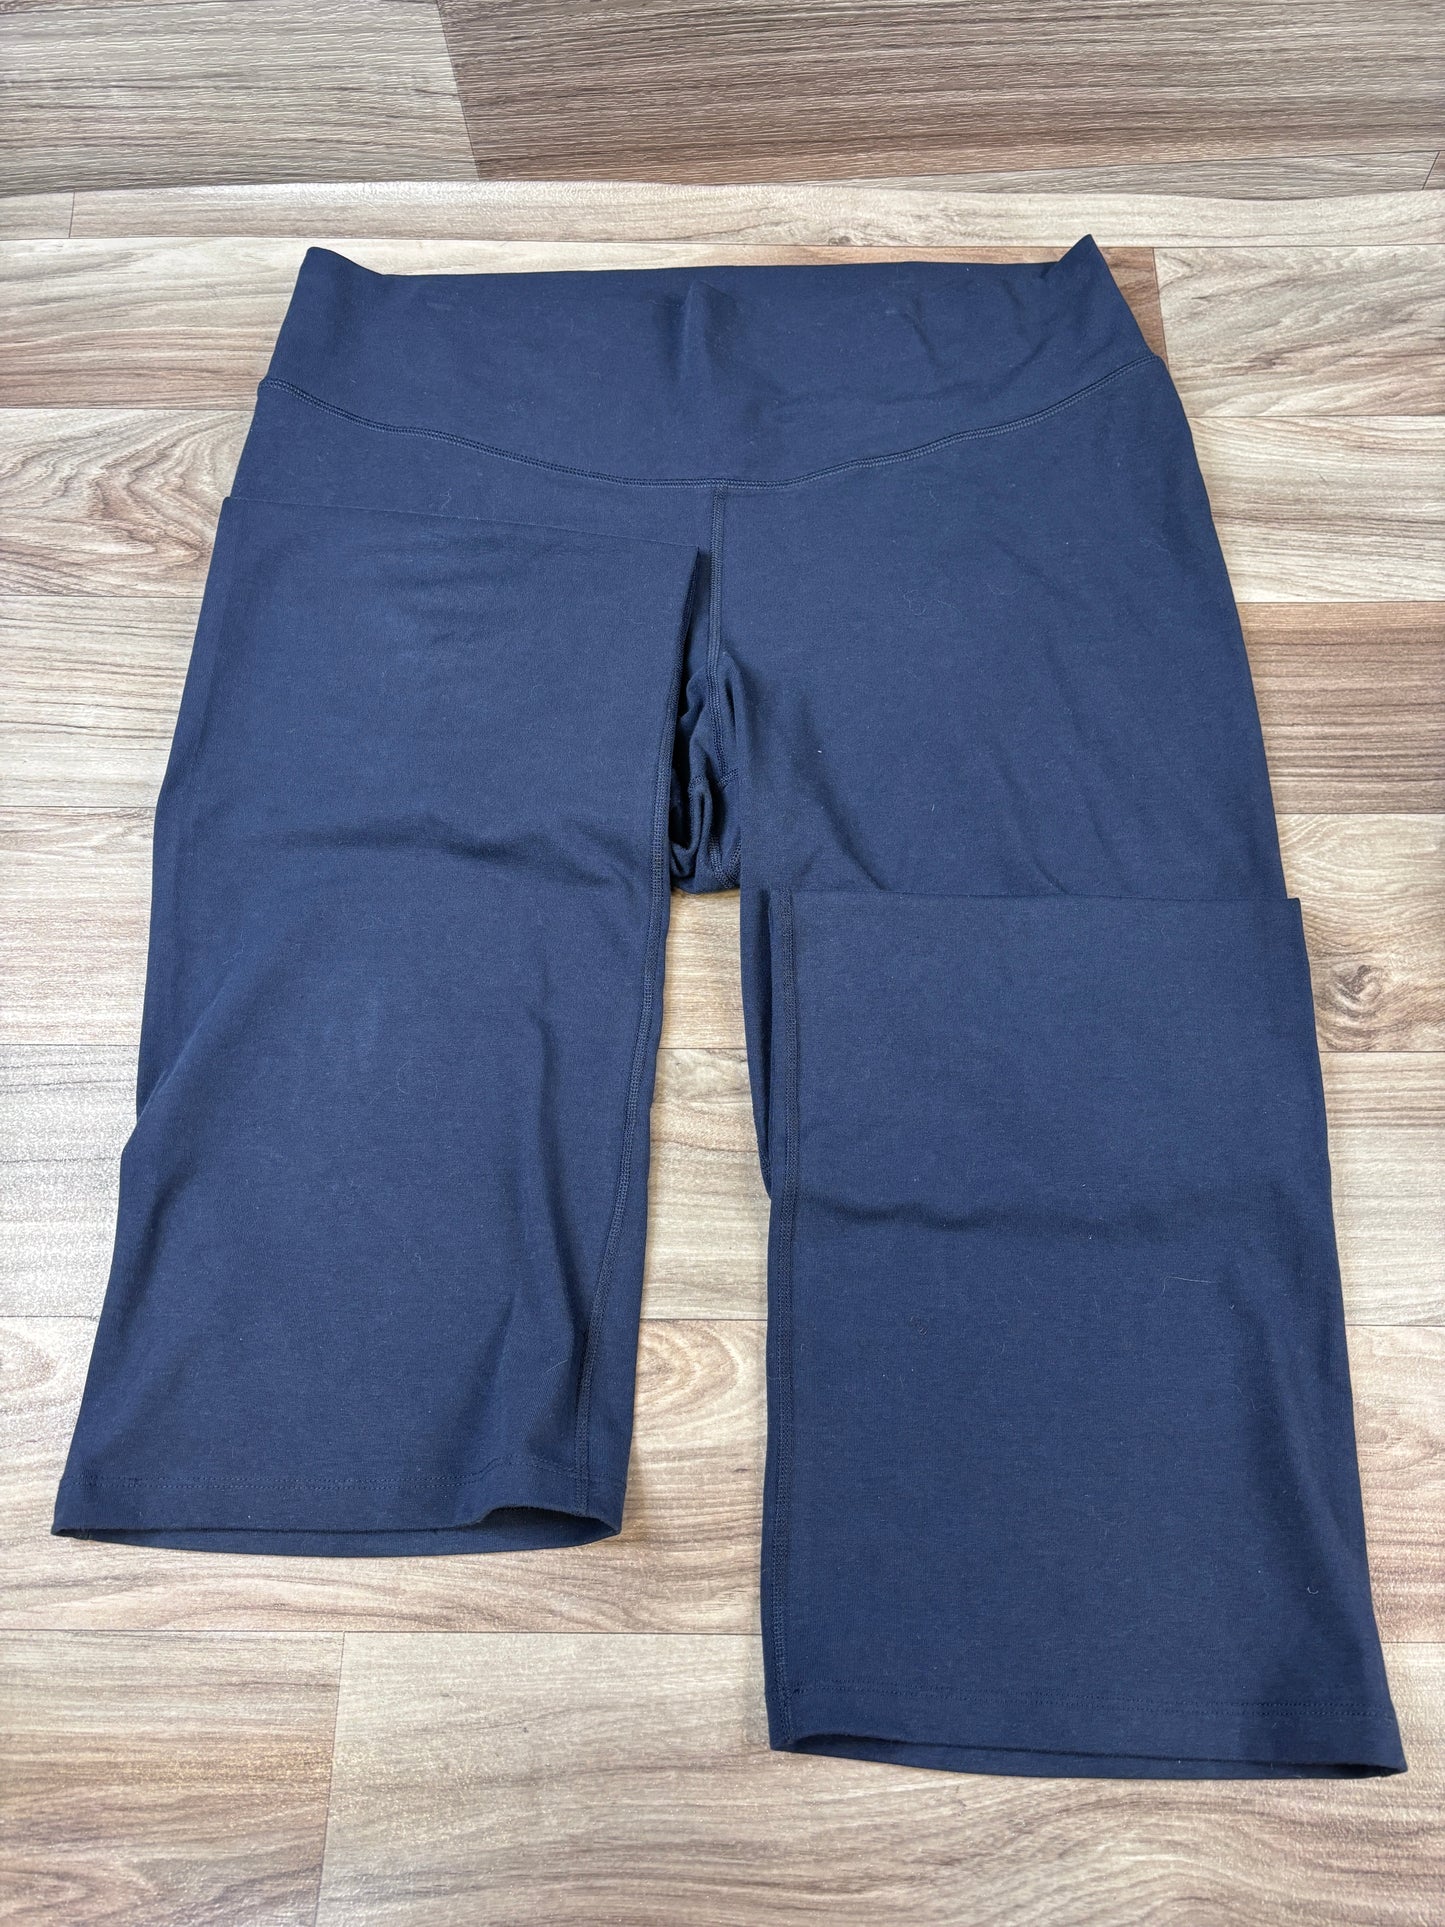 Pants Sweatpants By Old Navy  Size: Xxl